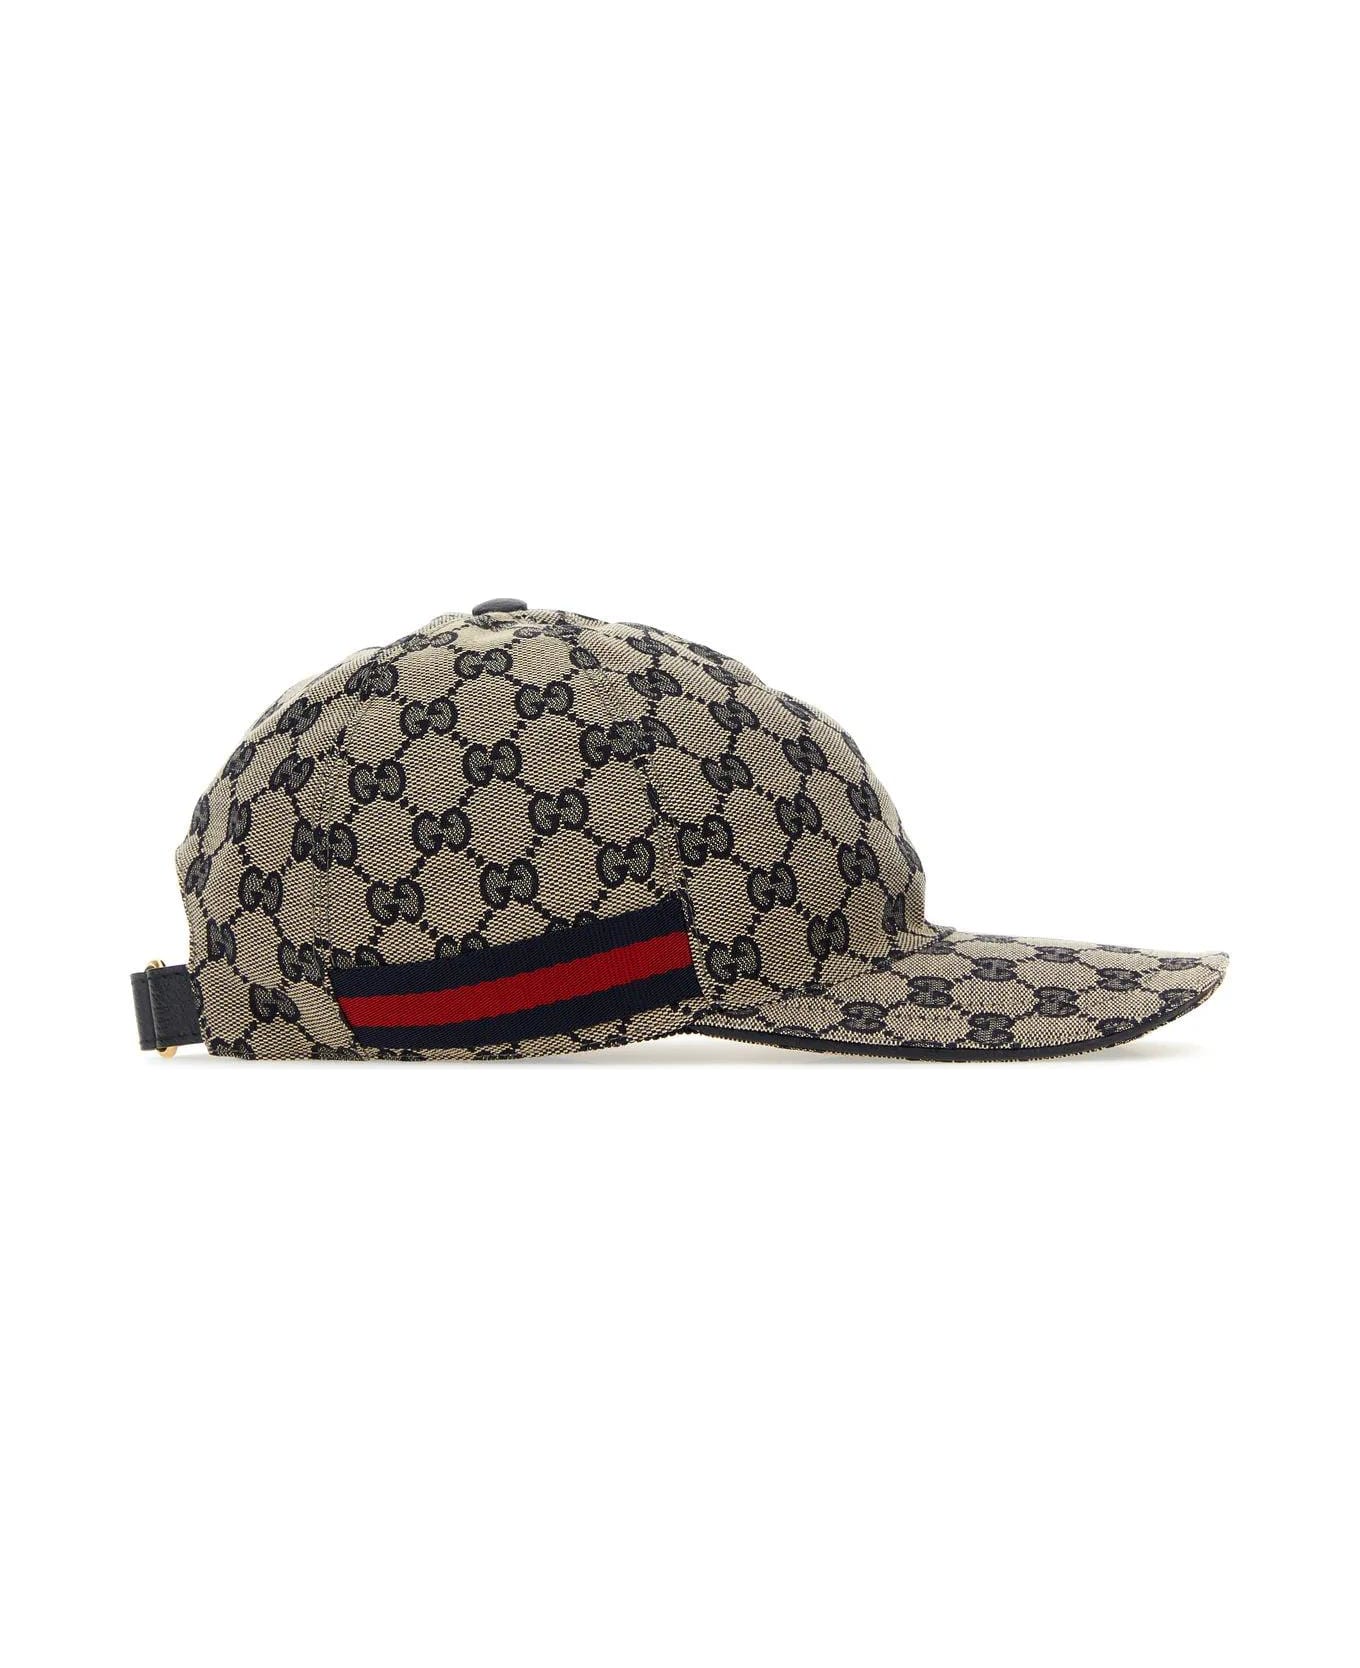 Gucci Gg Supreme Fabric Baseball Cap - Beige